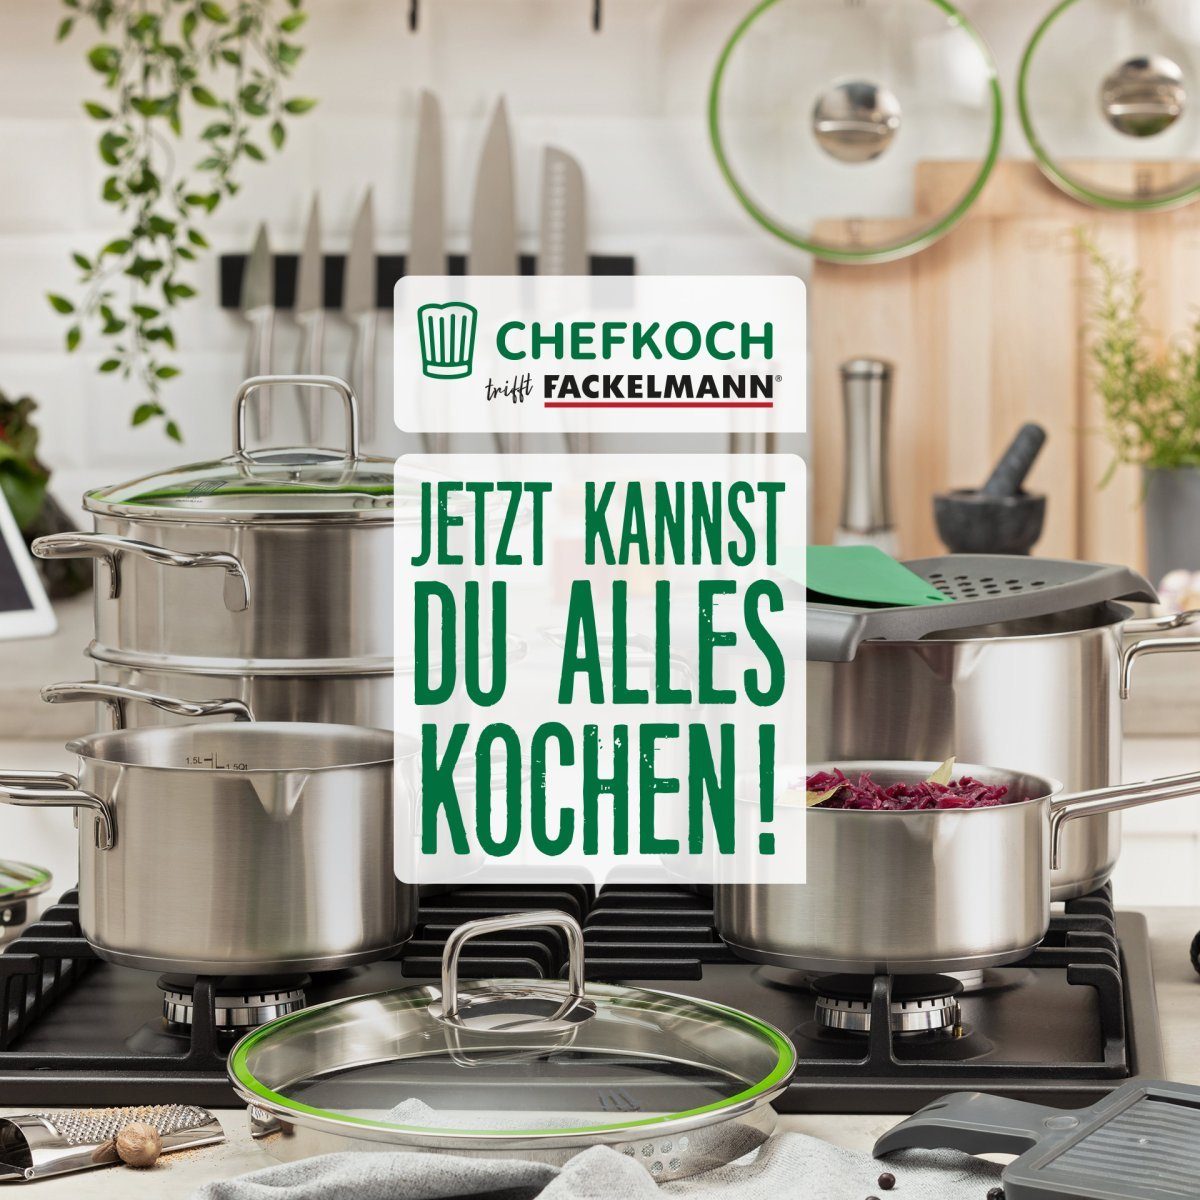 Chefkoch trifft Fackelmann Kochtopf München